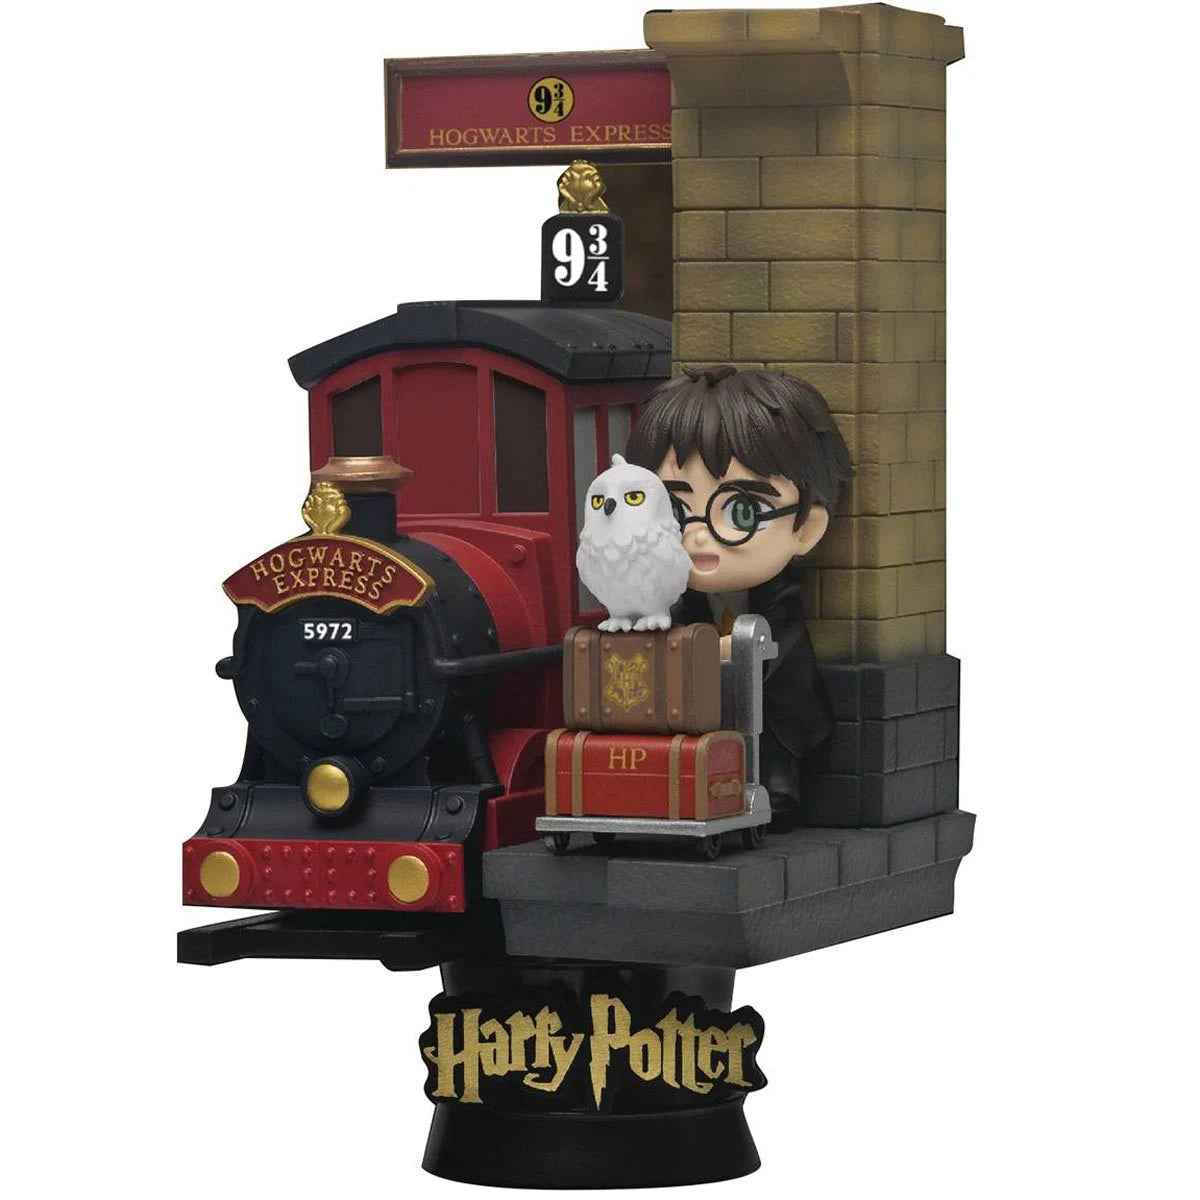 Top Harry Potter Gift Ideas Kids Will Love - Kid Bam | Harry potter gifts, Harry  potter gifts diy, Harry potter party ideas diy